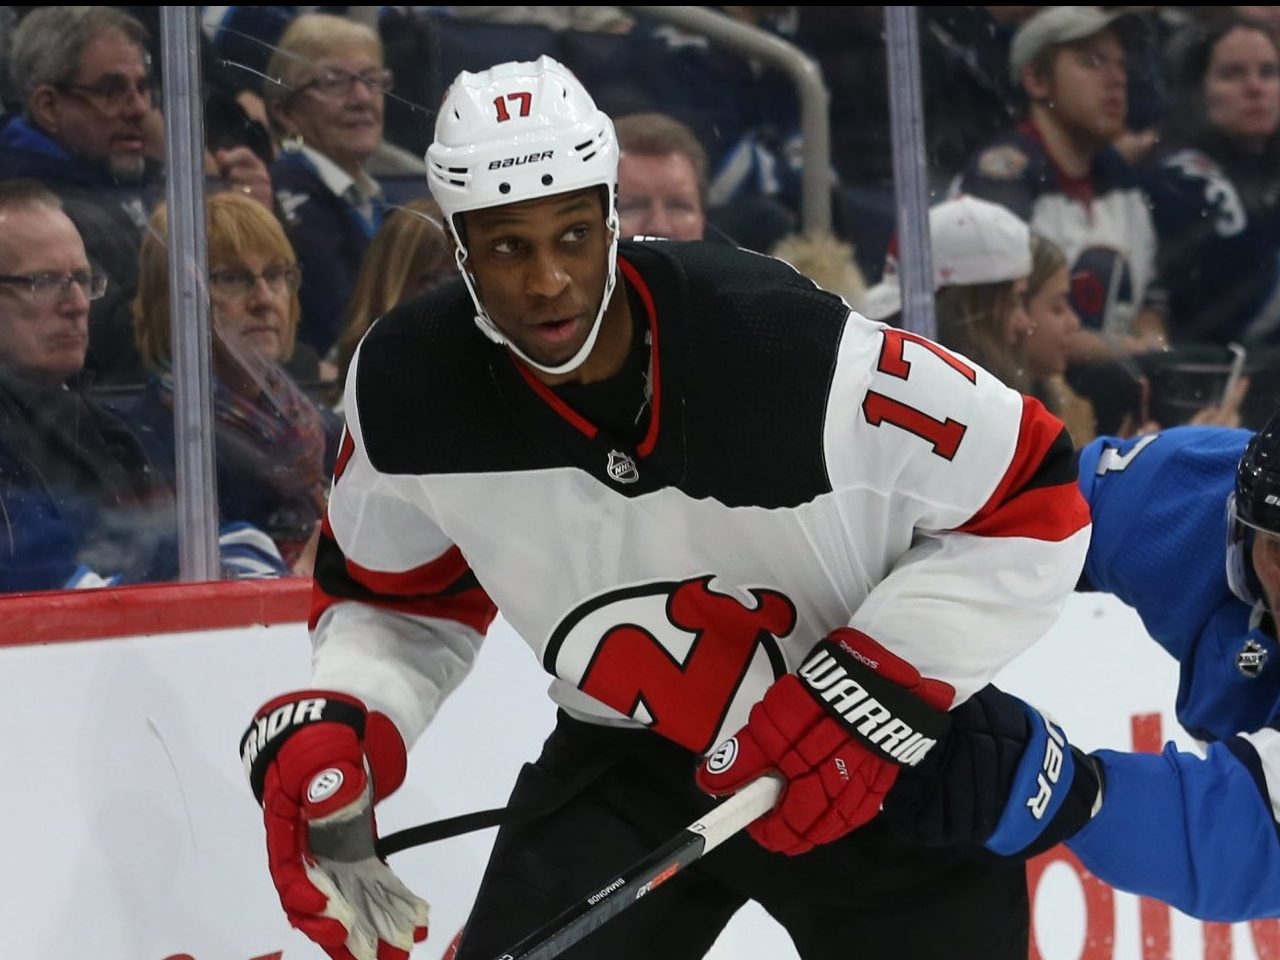 Wayne Simmonds brings 'functional toughness' to Maple Leafs | Toronto Sun